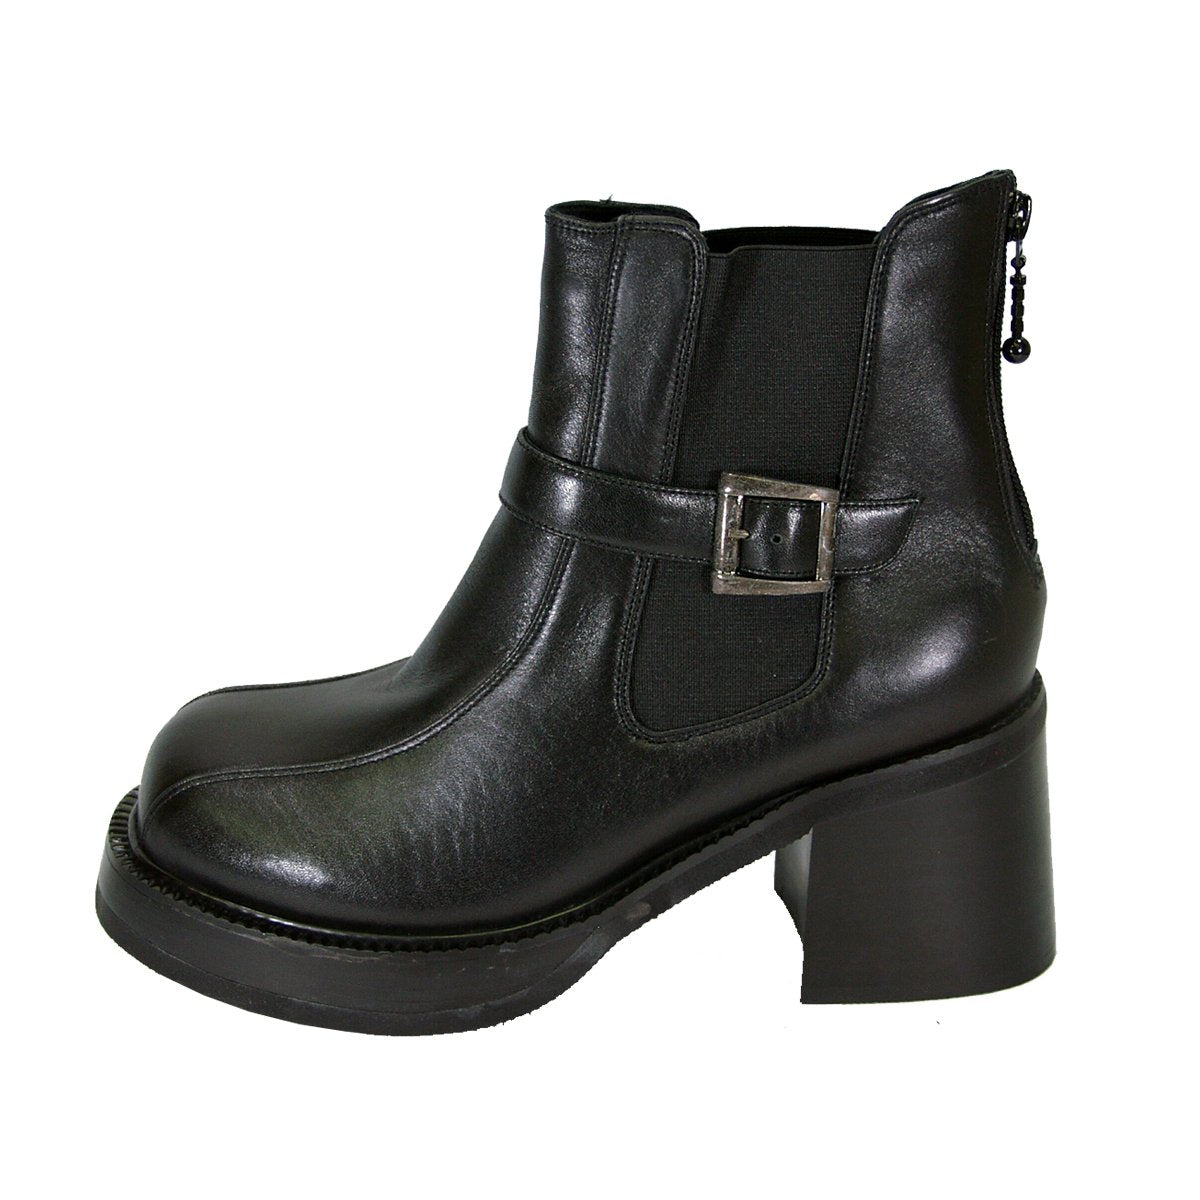 PEERAGE Ricky Men's Medium Width Leather Boots